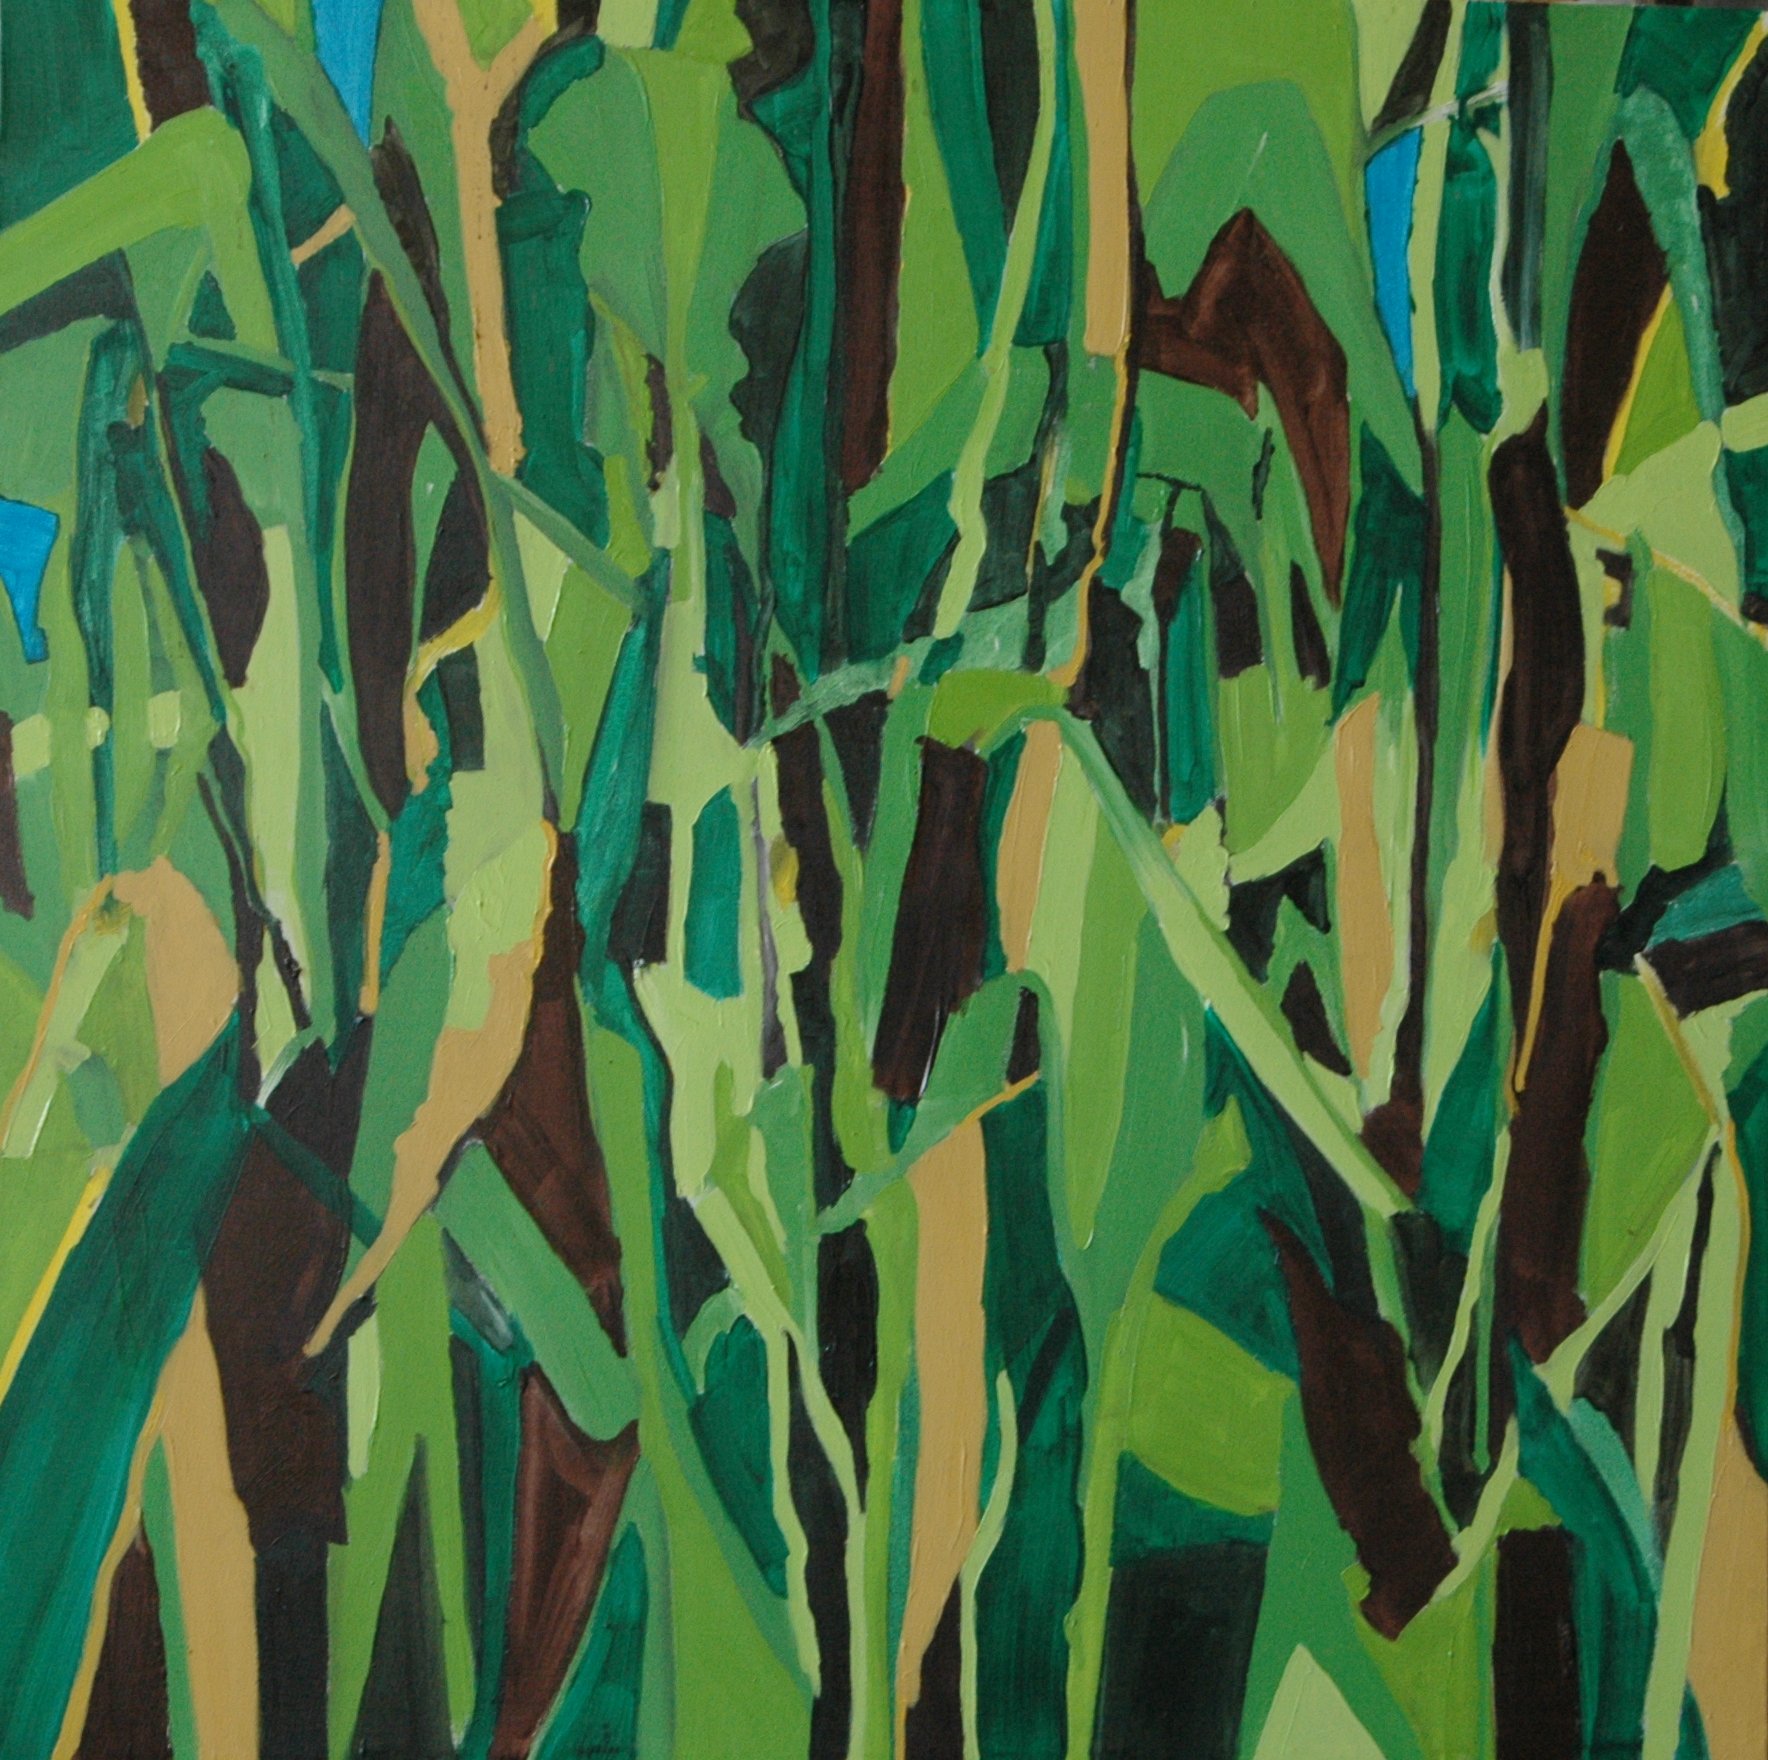 07. Pretty green. Oil paint on canvas, 100x100cm, 2013